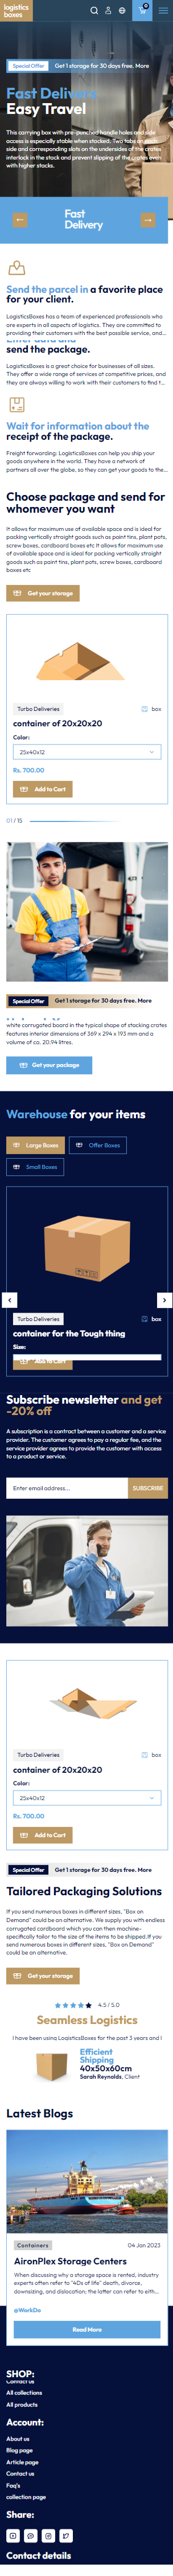 Logistics boxes Shopify Theme - WorkDo